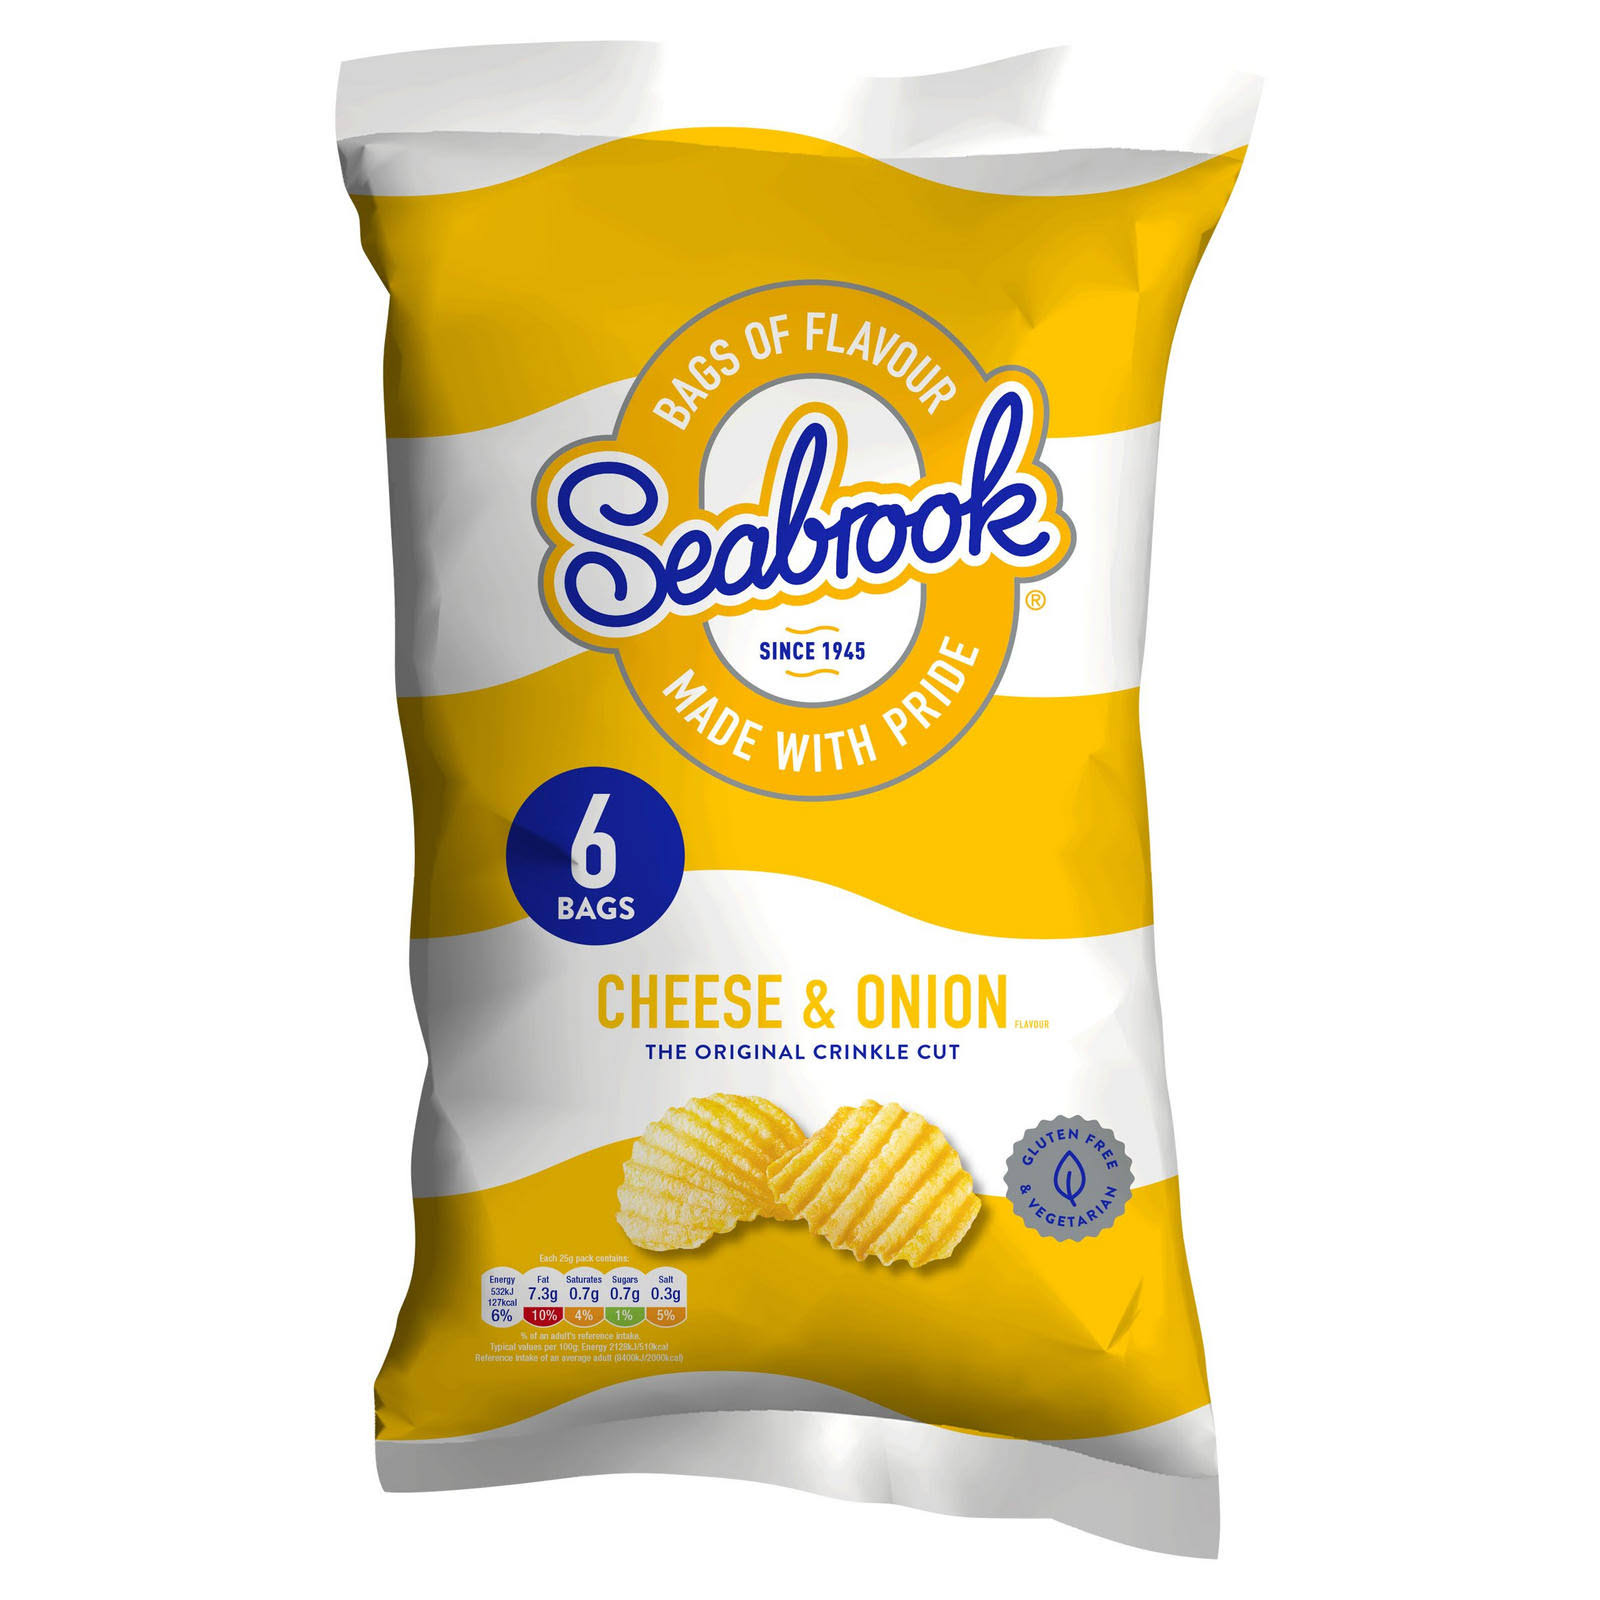 Seabrook Cheese & Onion Crisps 6 Pack